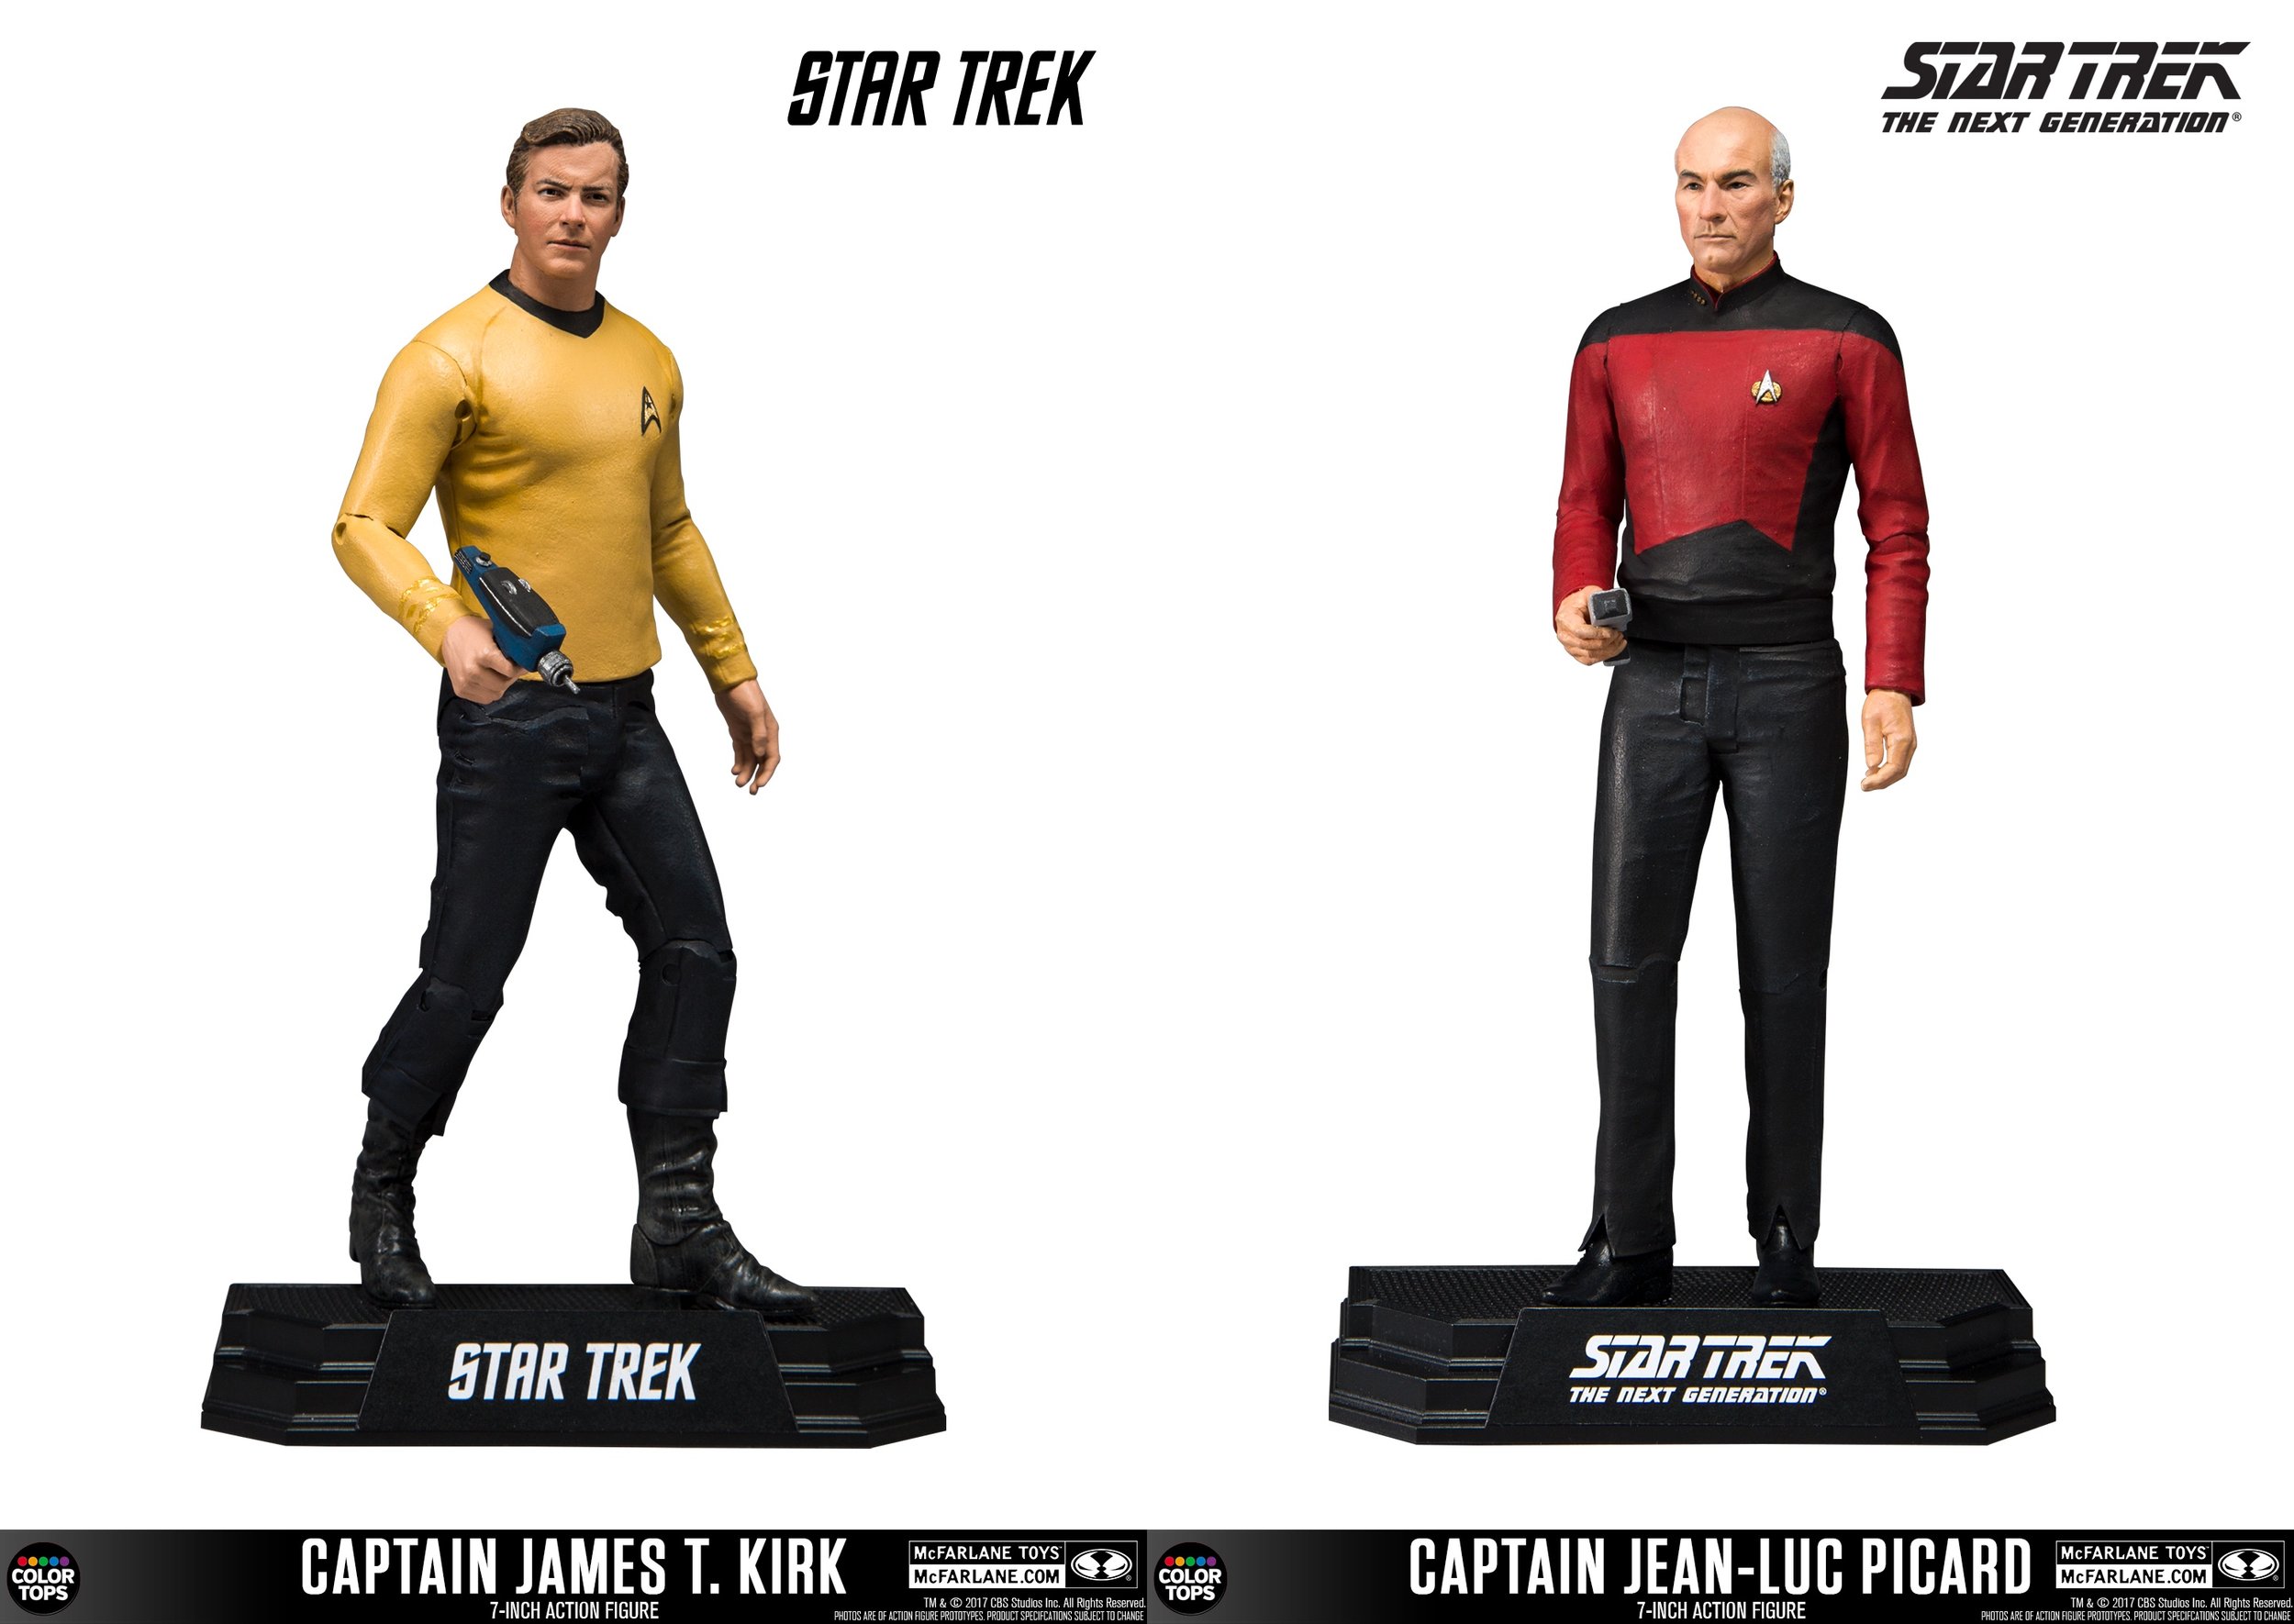 McFarlane Toys Captain Kirk and Captain Picard Star Trek Action Figures Set of 2 